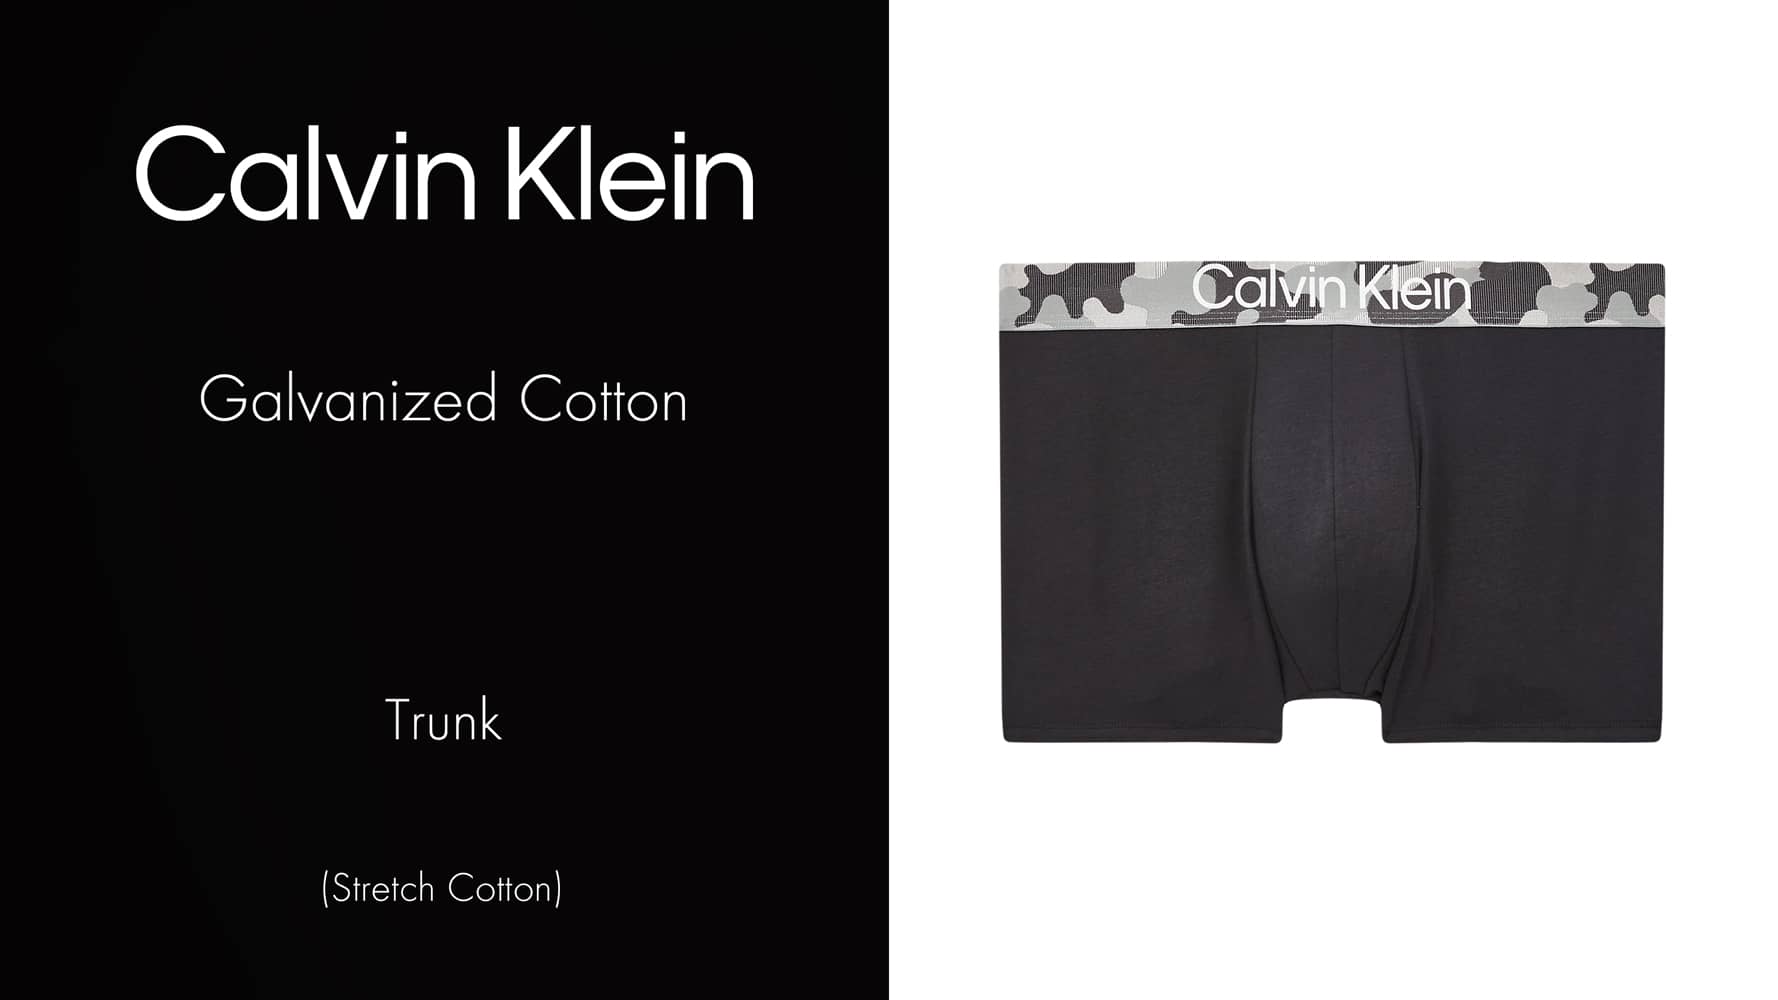 Trunk - Galvanized Cotton